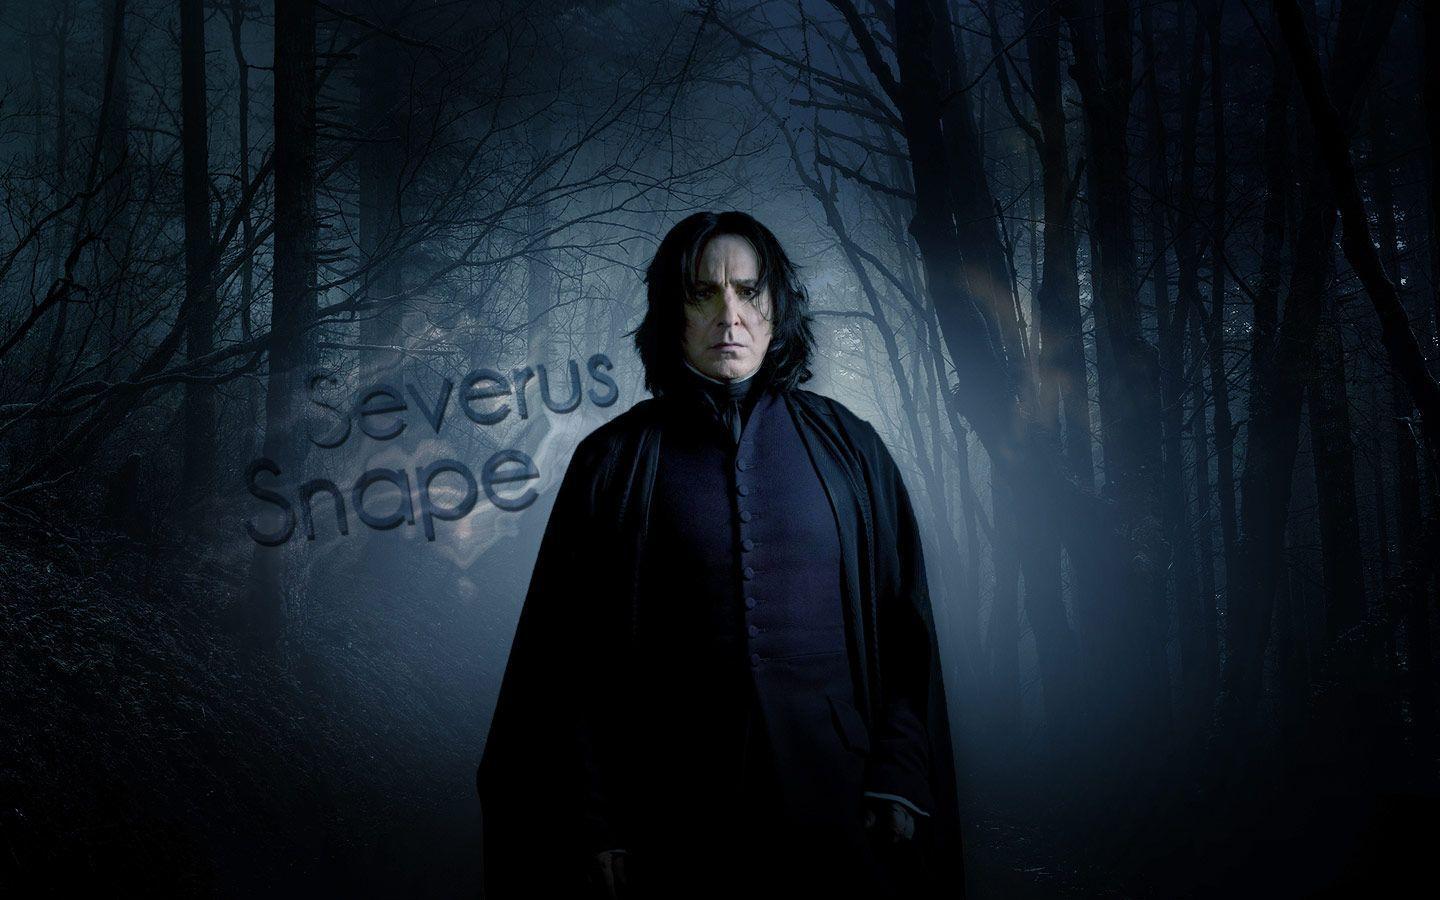 Severus Free Snape 1440x900 #severus